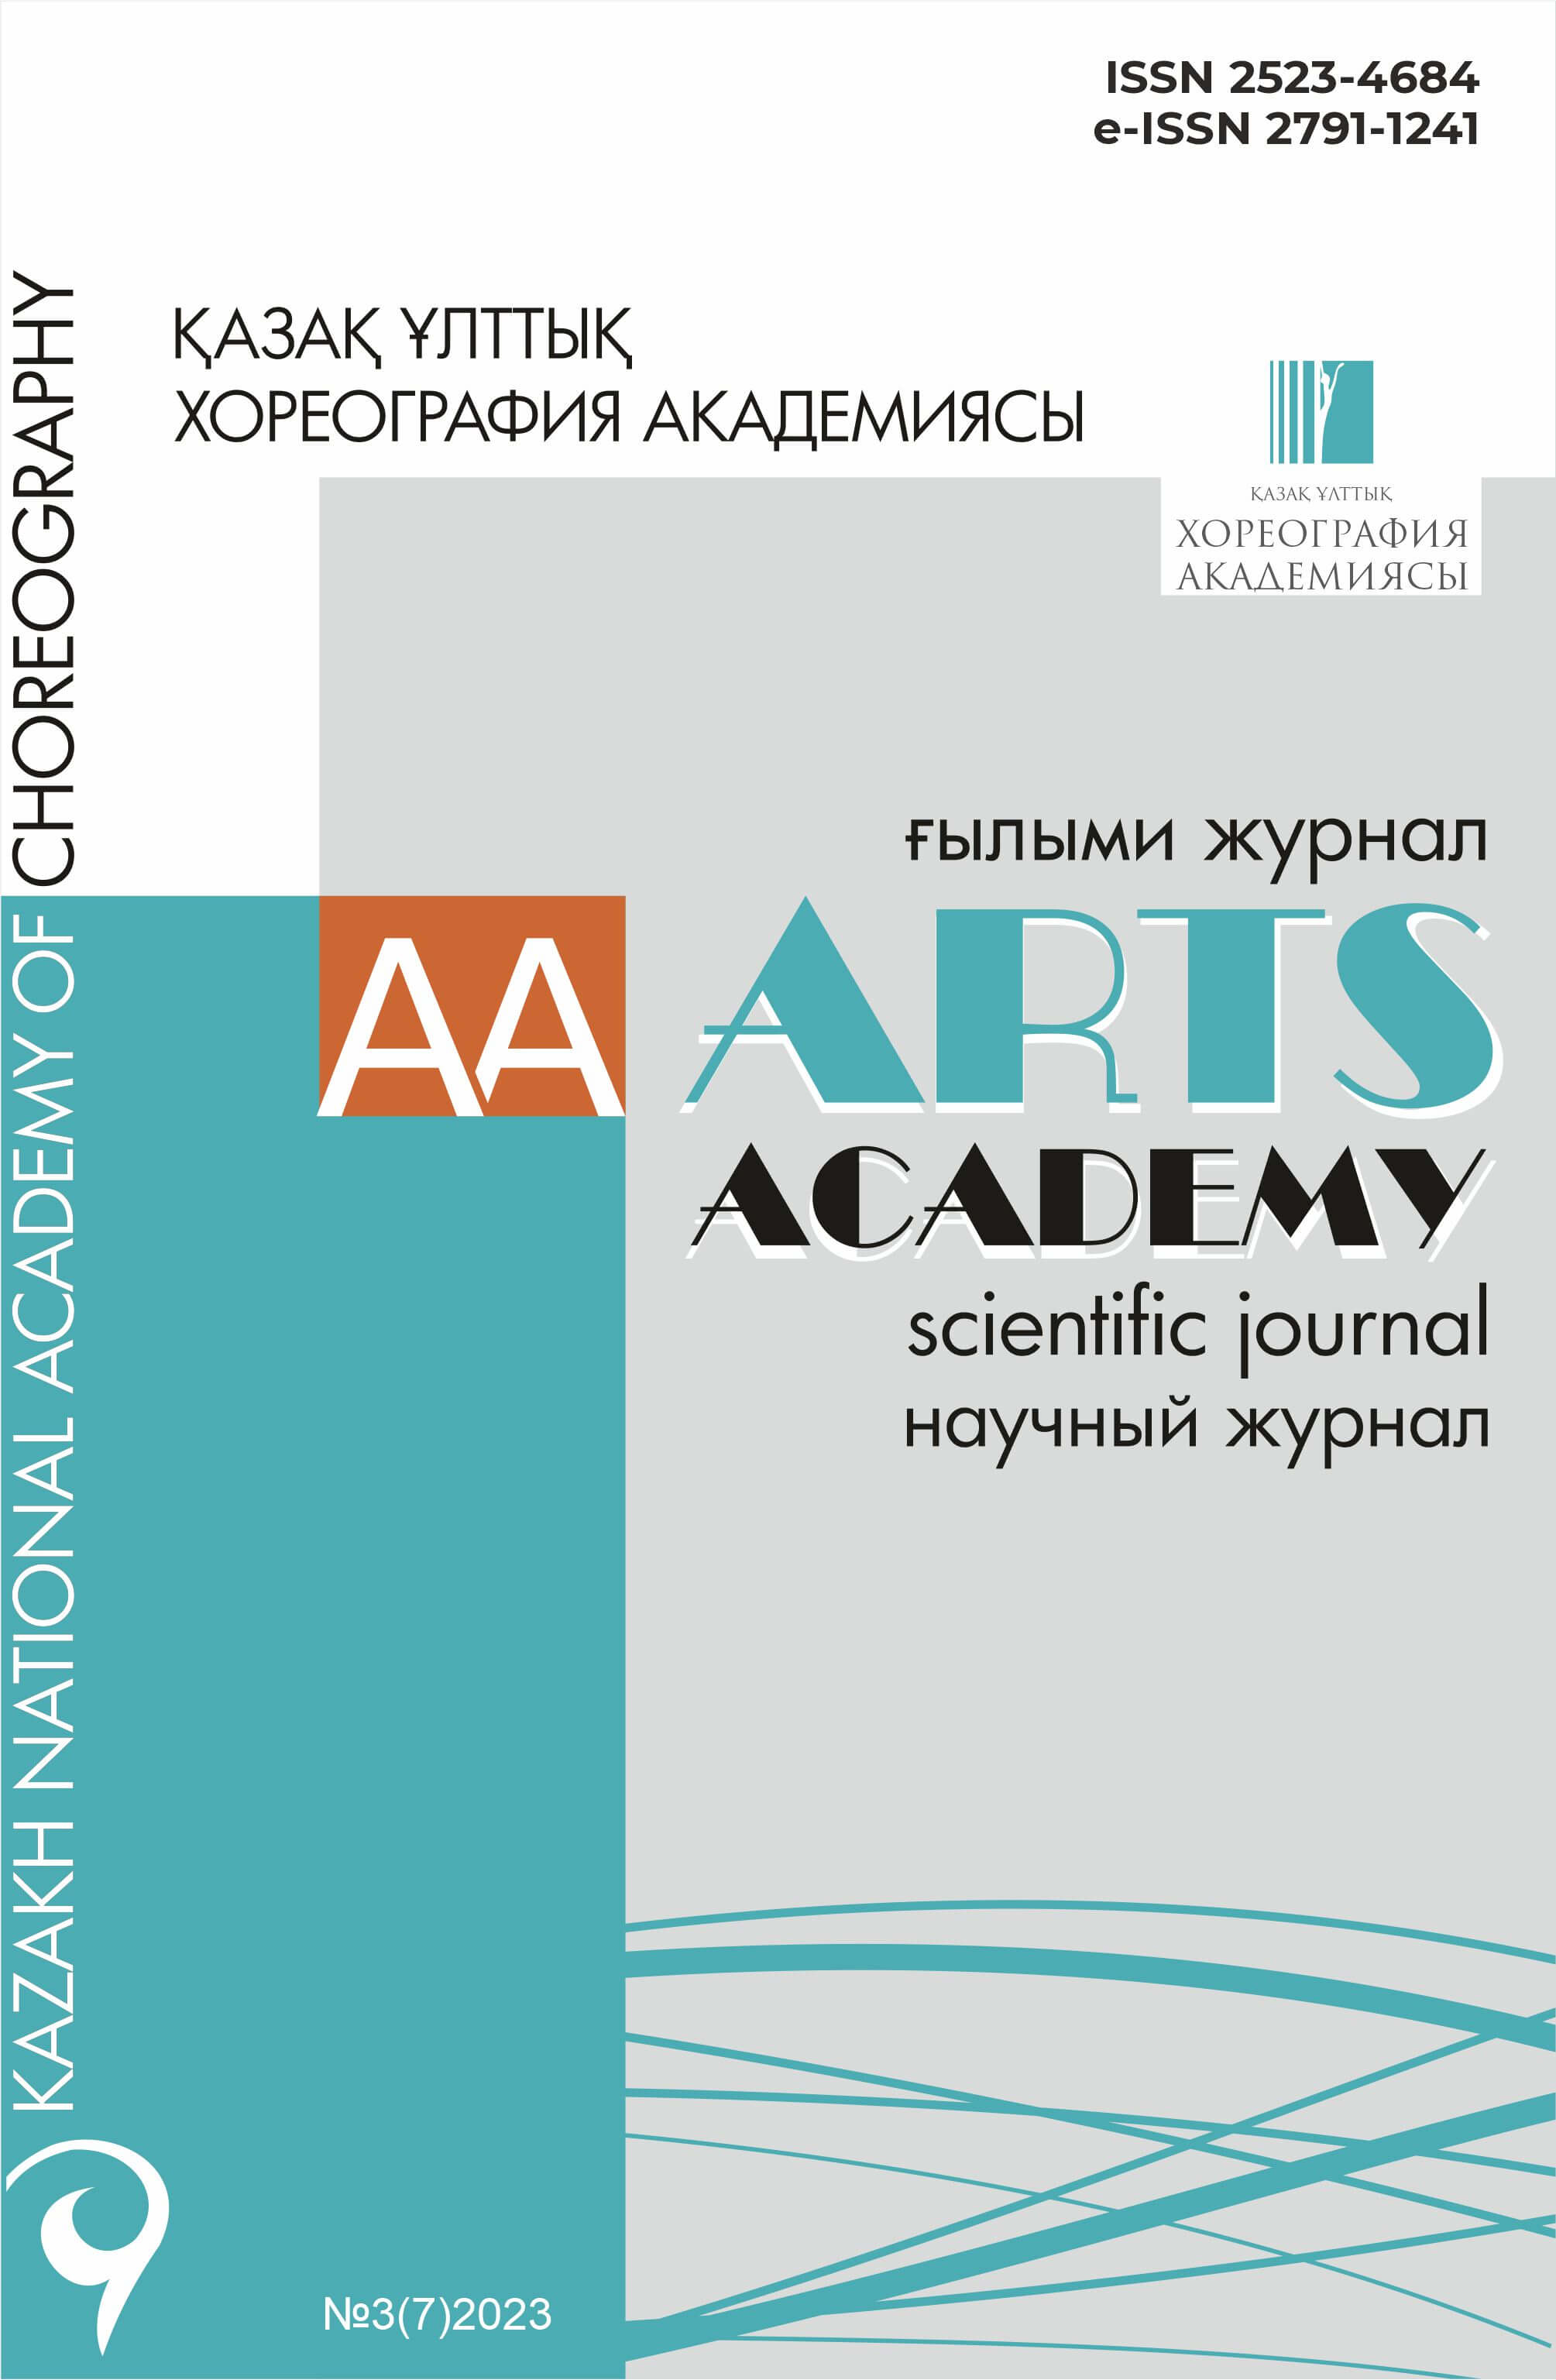 Scientific journal «ARTS ACADEMY» №3(7)2023